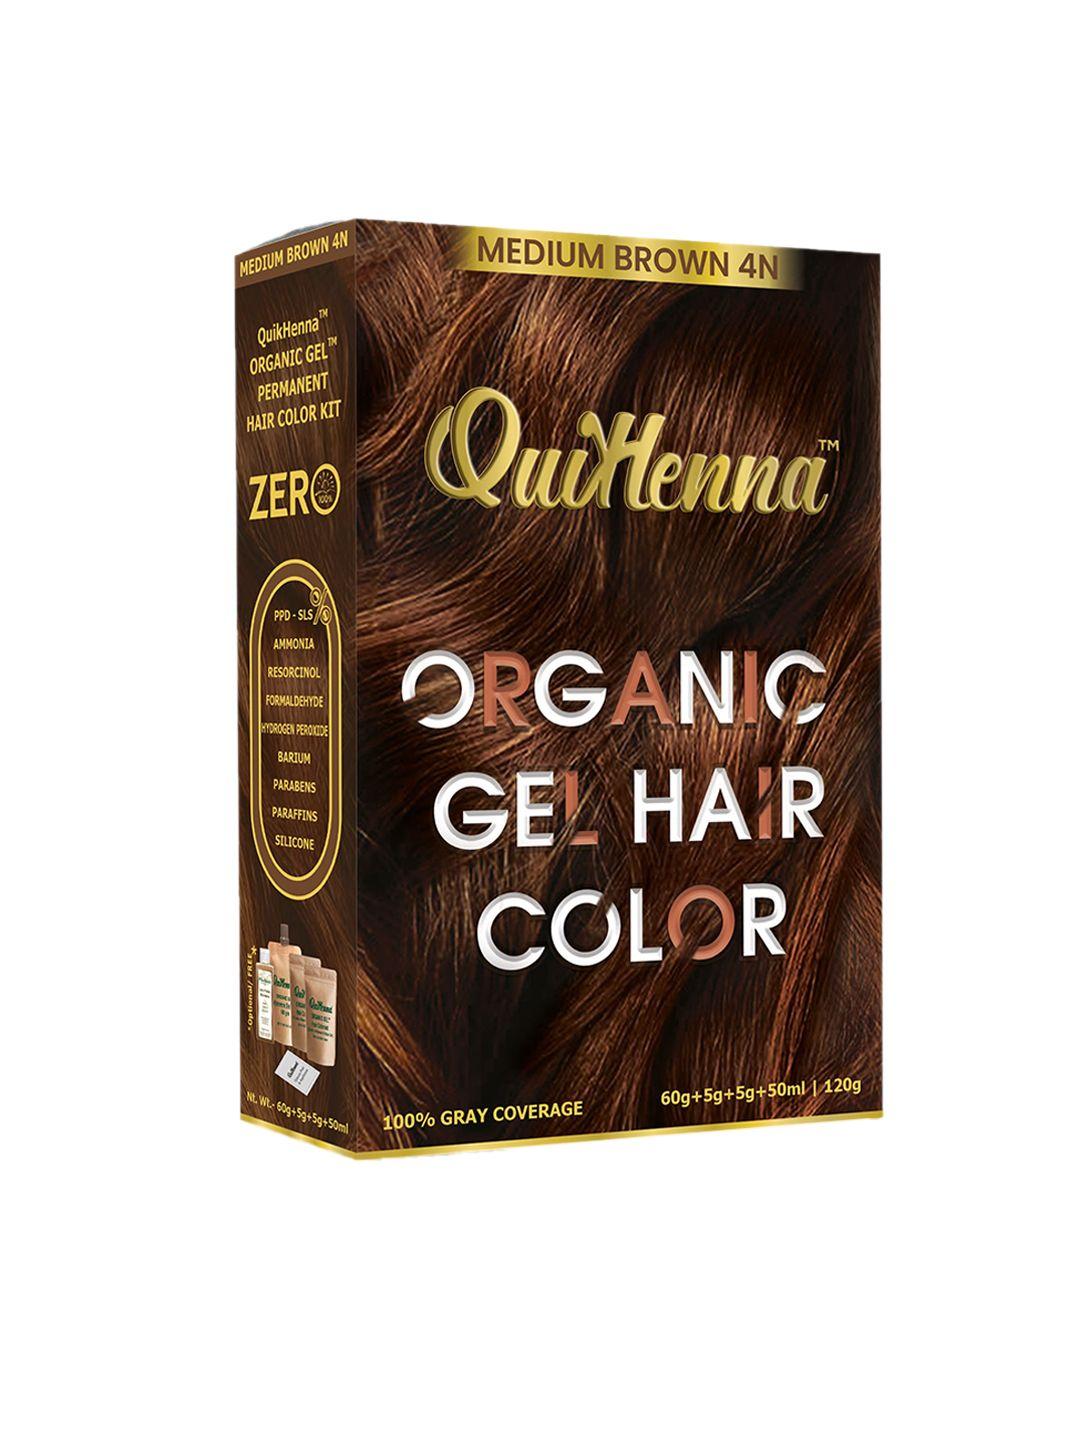 quikhenna damage free organic gel hair color 120 g - medium brown 4 n